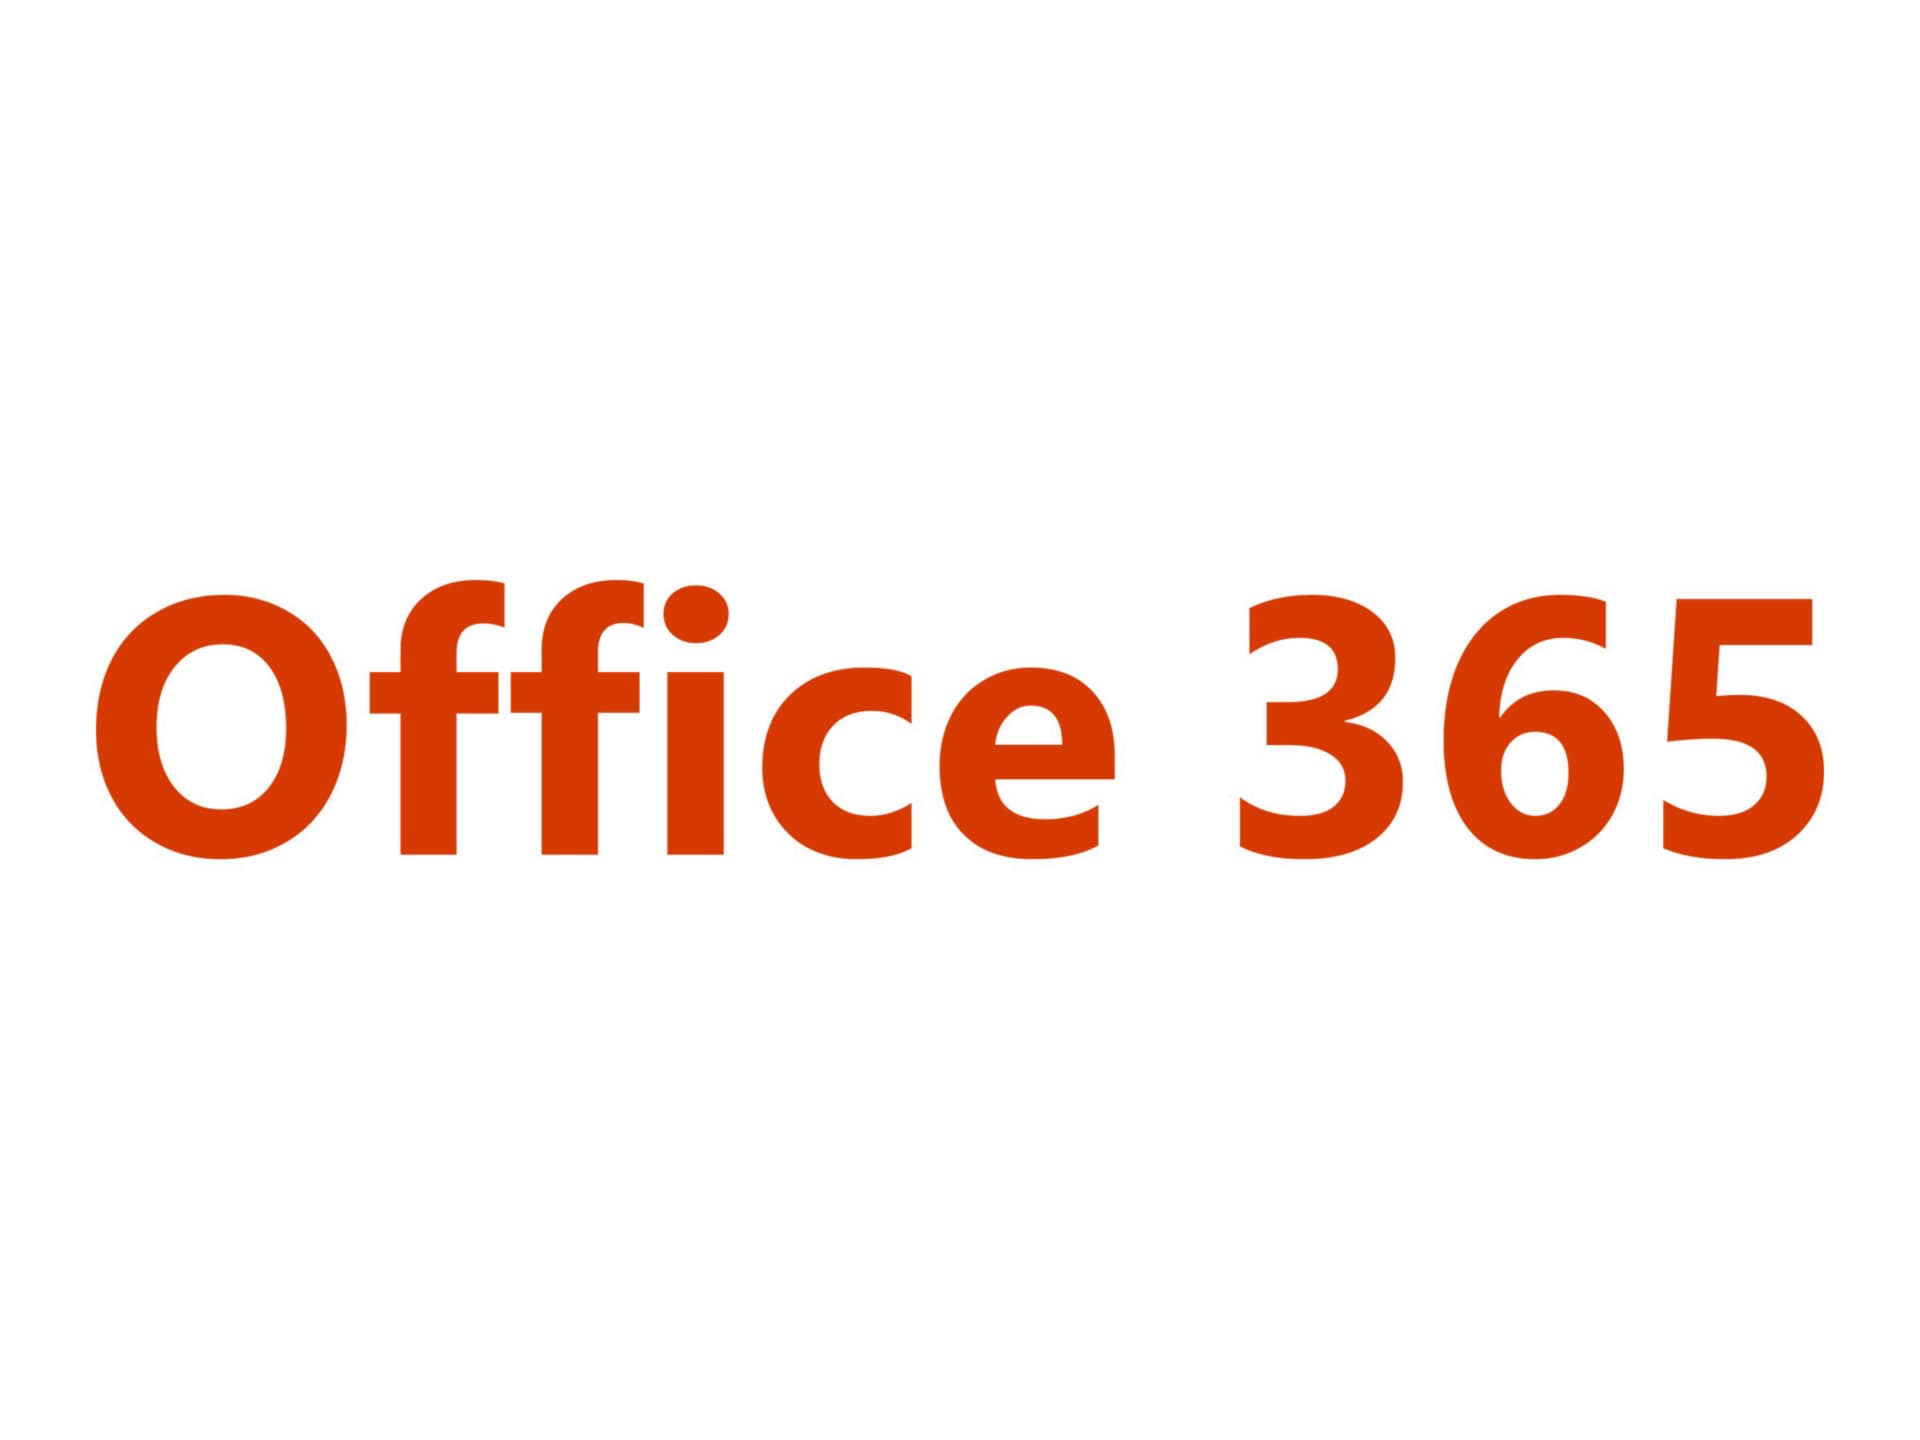 Microsoft Office 365 Enterprise E3 Subscription License 1 Month